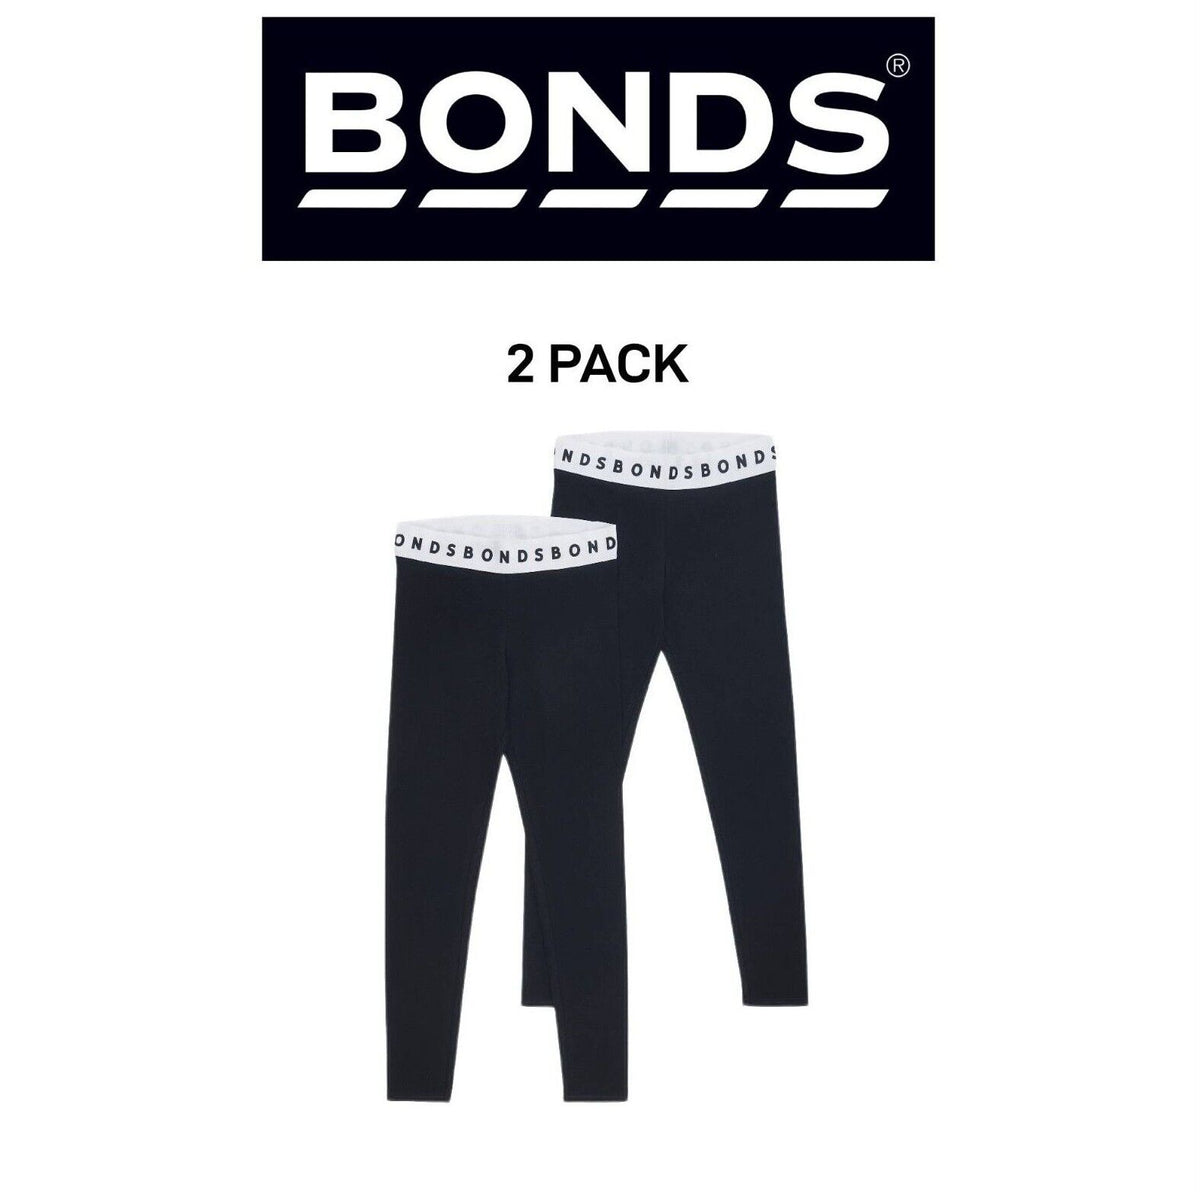 Bonds Girls Hipster Leggings Comfortable Elastic Stretchy Cotton 2 Pack KWE7K